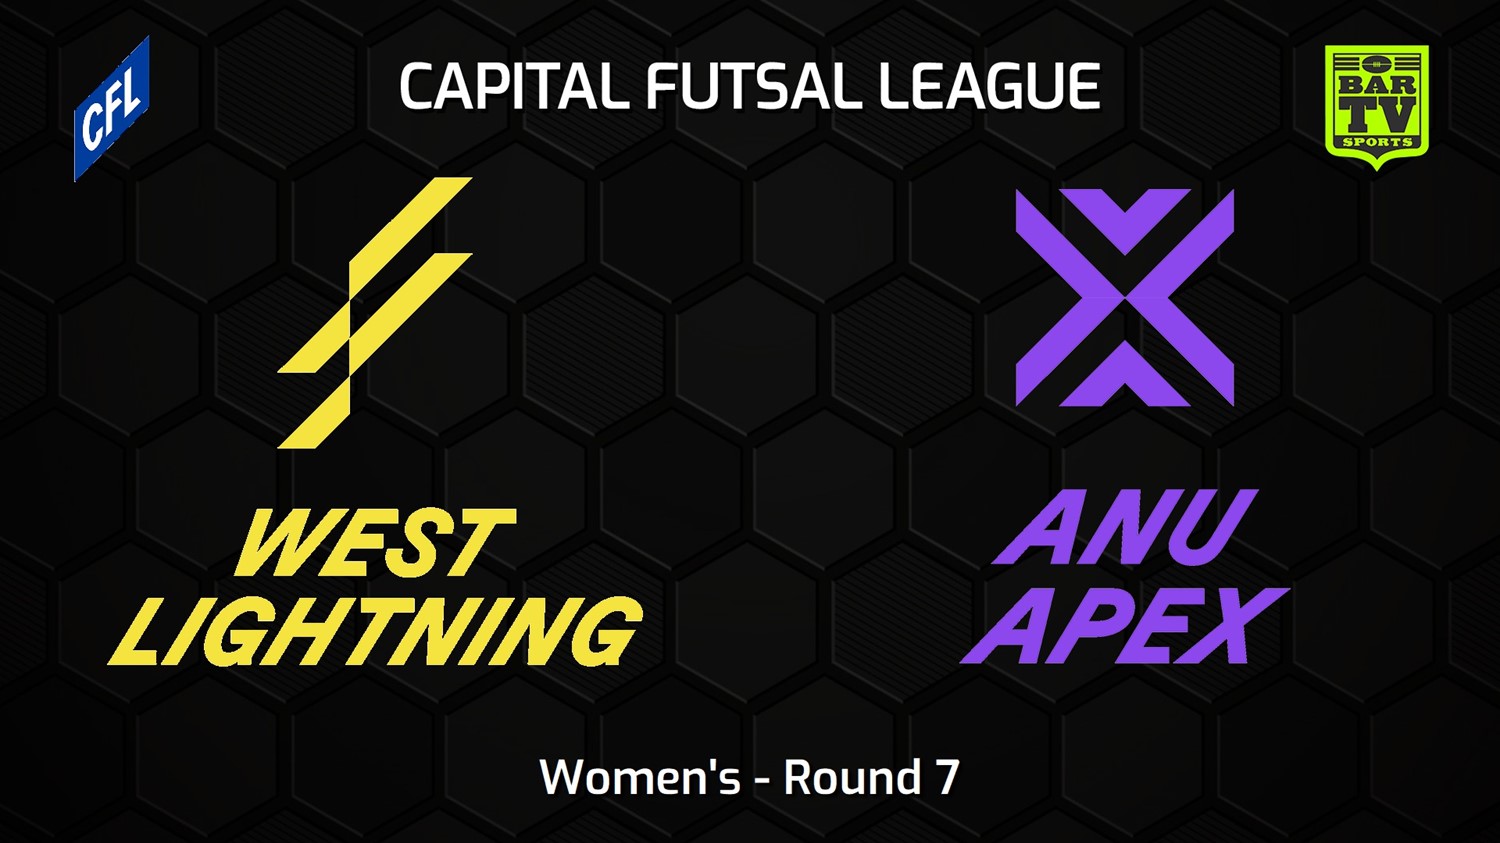 231202-Capital Football Futsal Round 7 - Women's - West Canberra Lightning v ANU Apex Minigame Slate Image